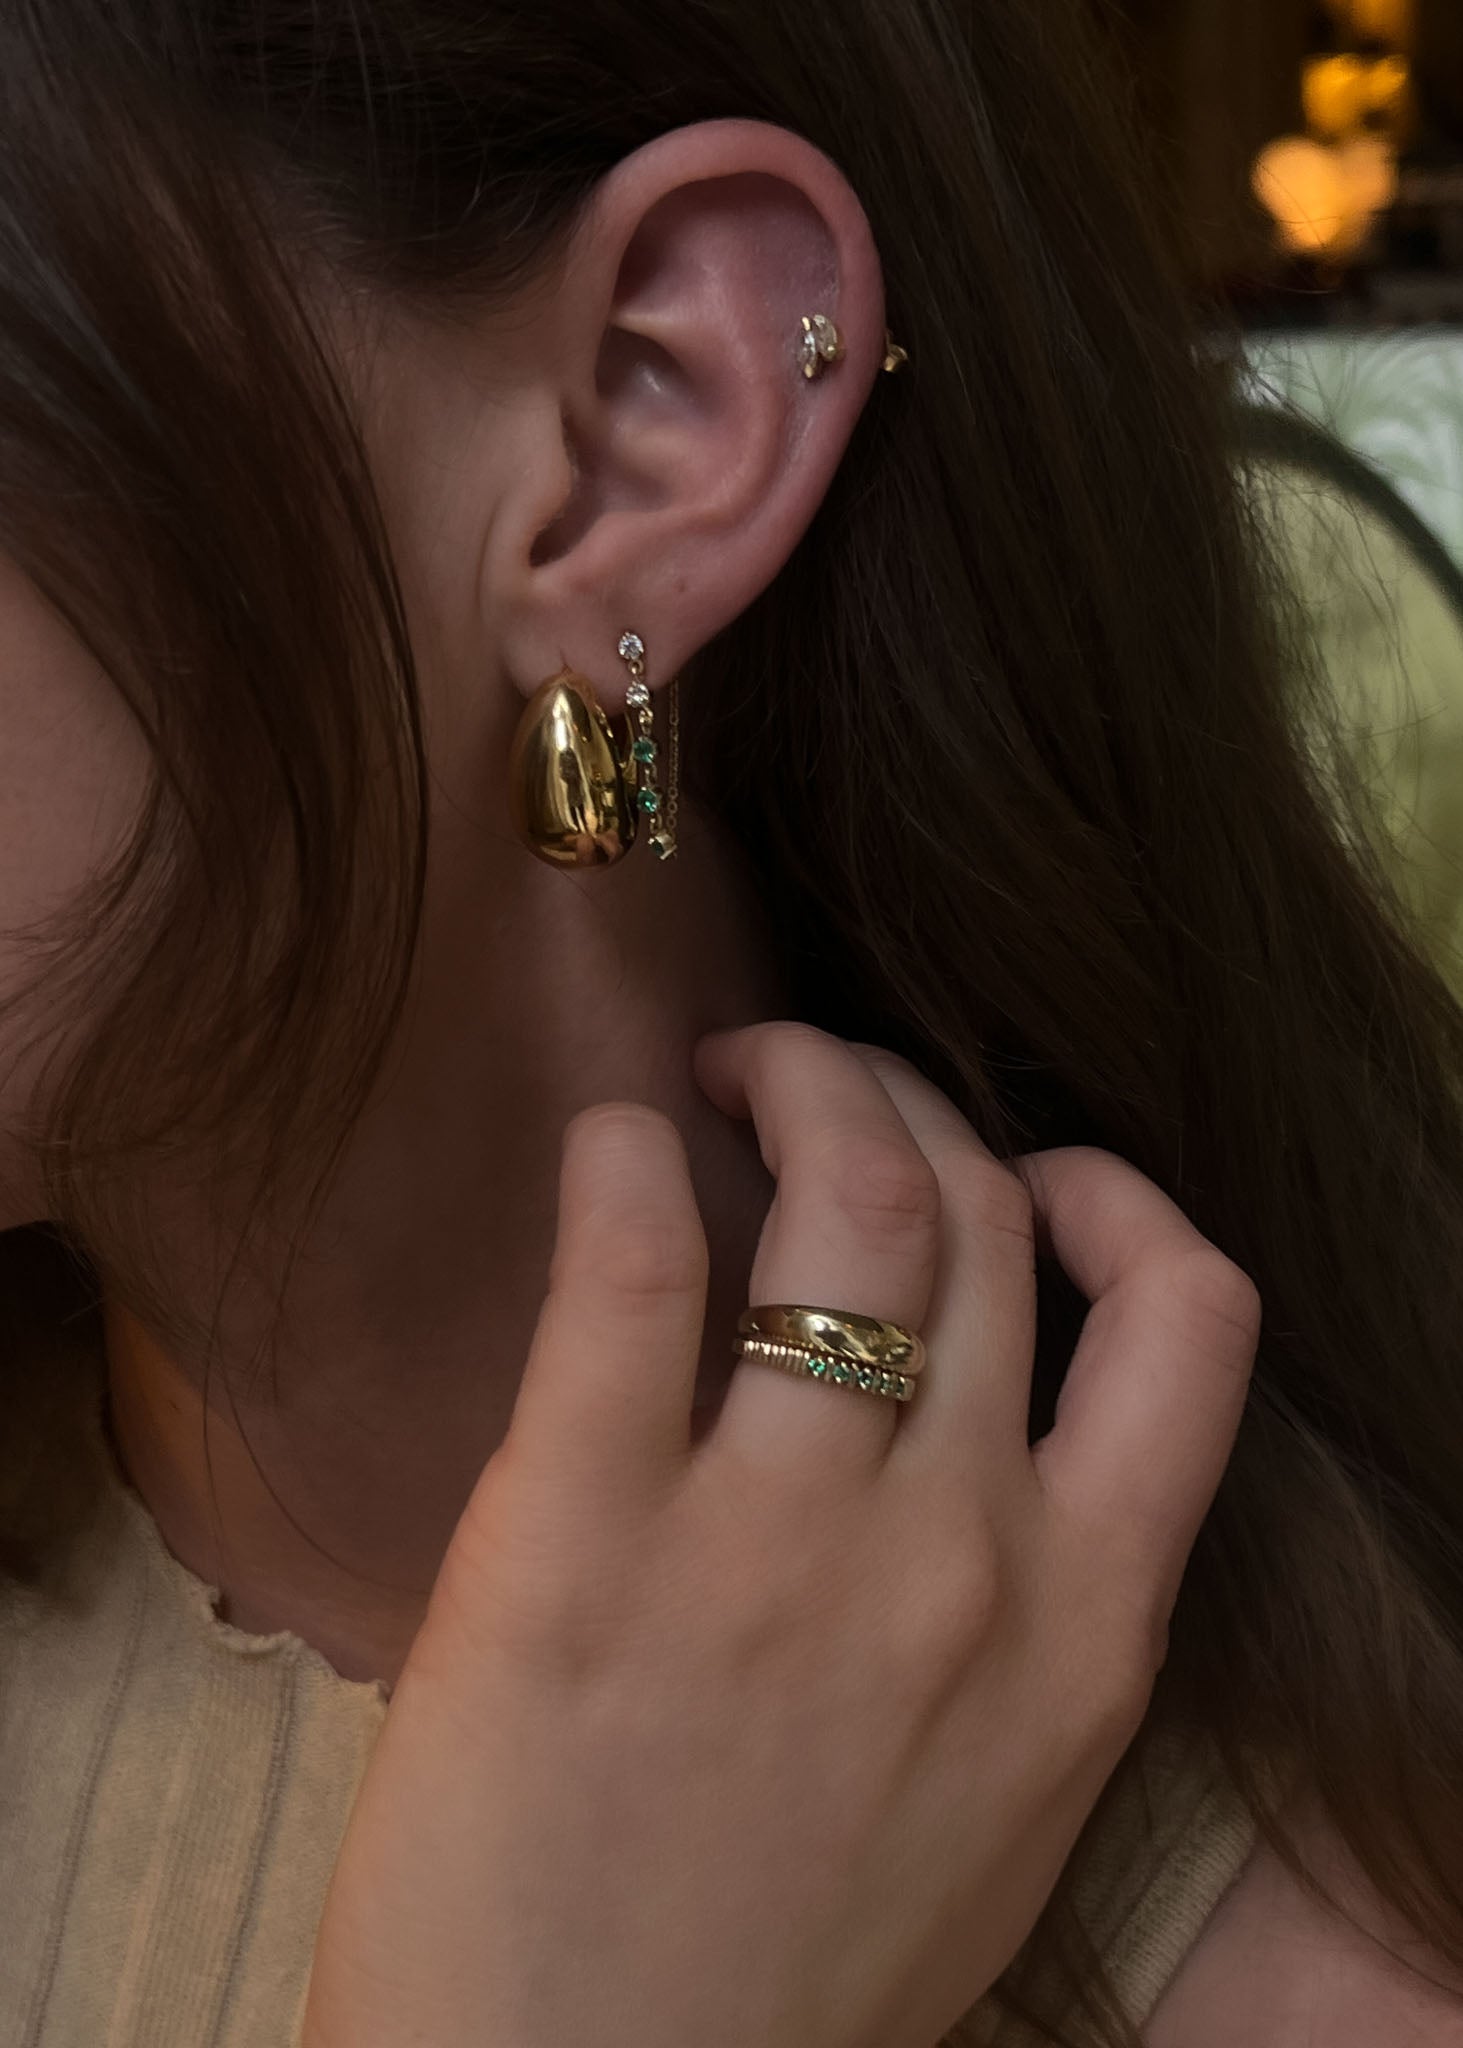 Five Stone Chain Earrings Emerald